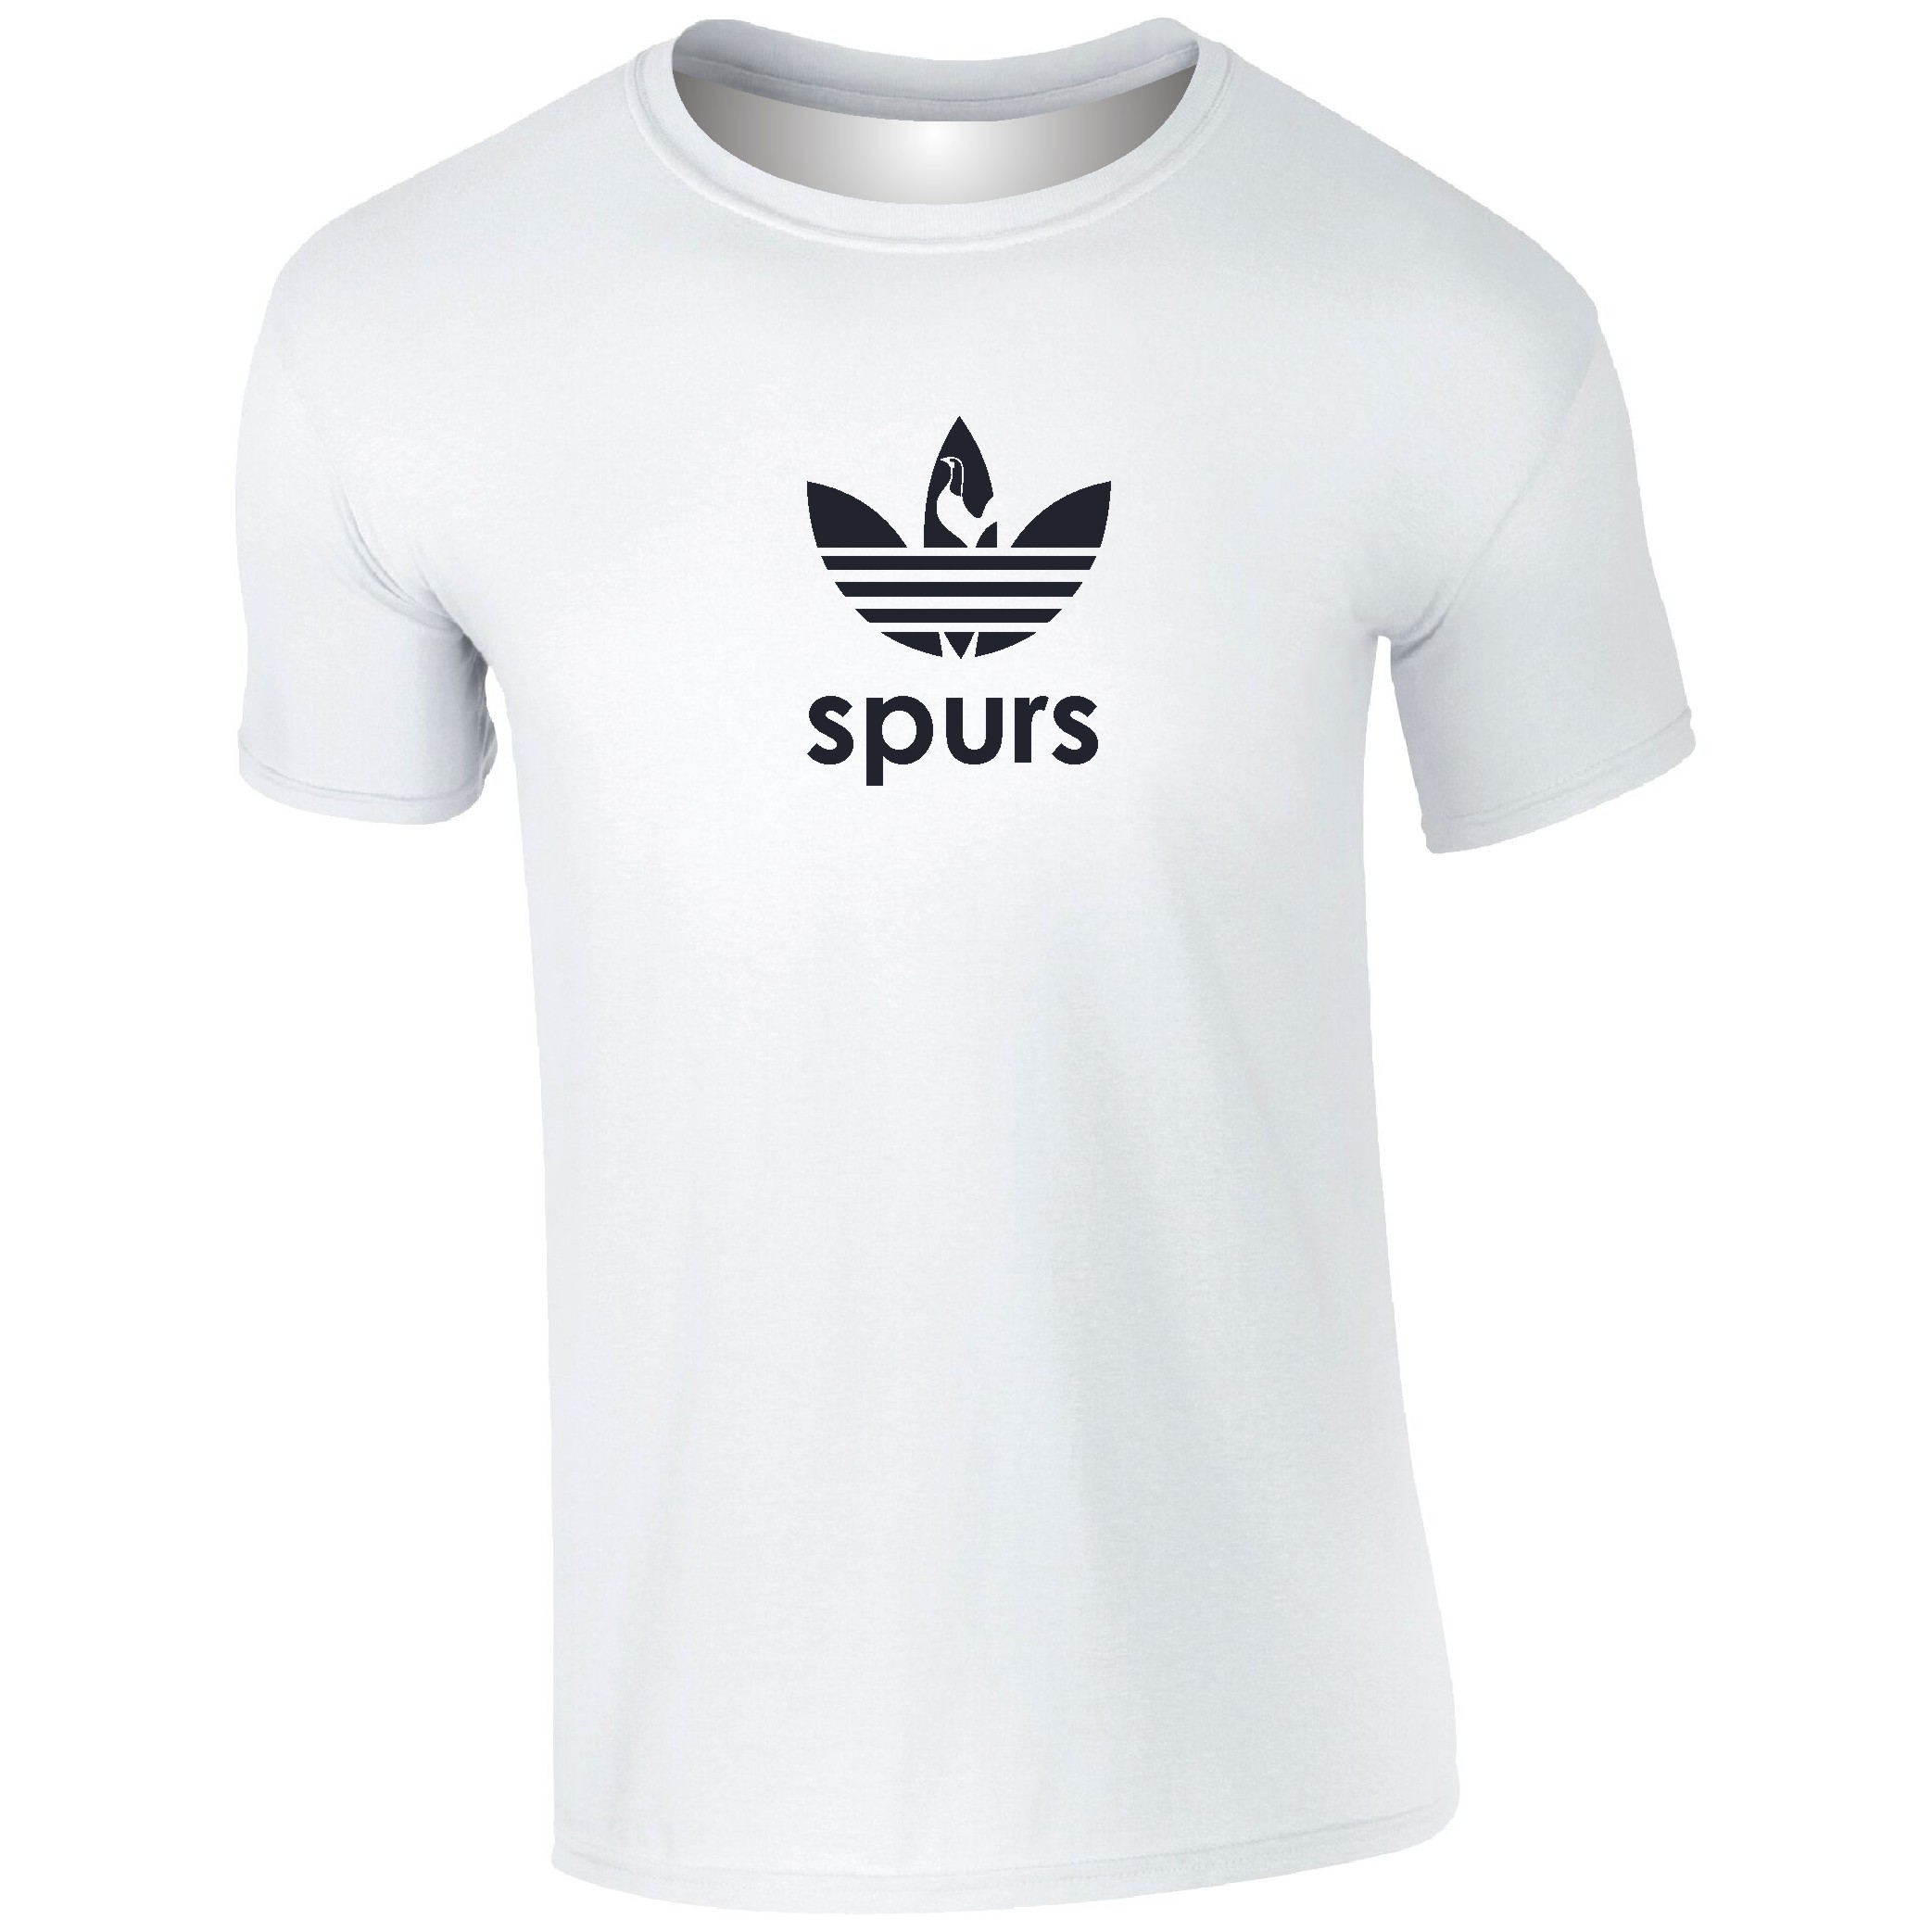 Spurs Iconic T-Shirt - Teejac